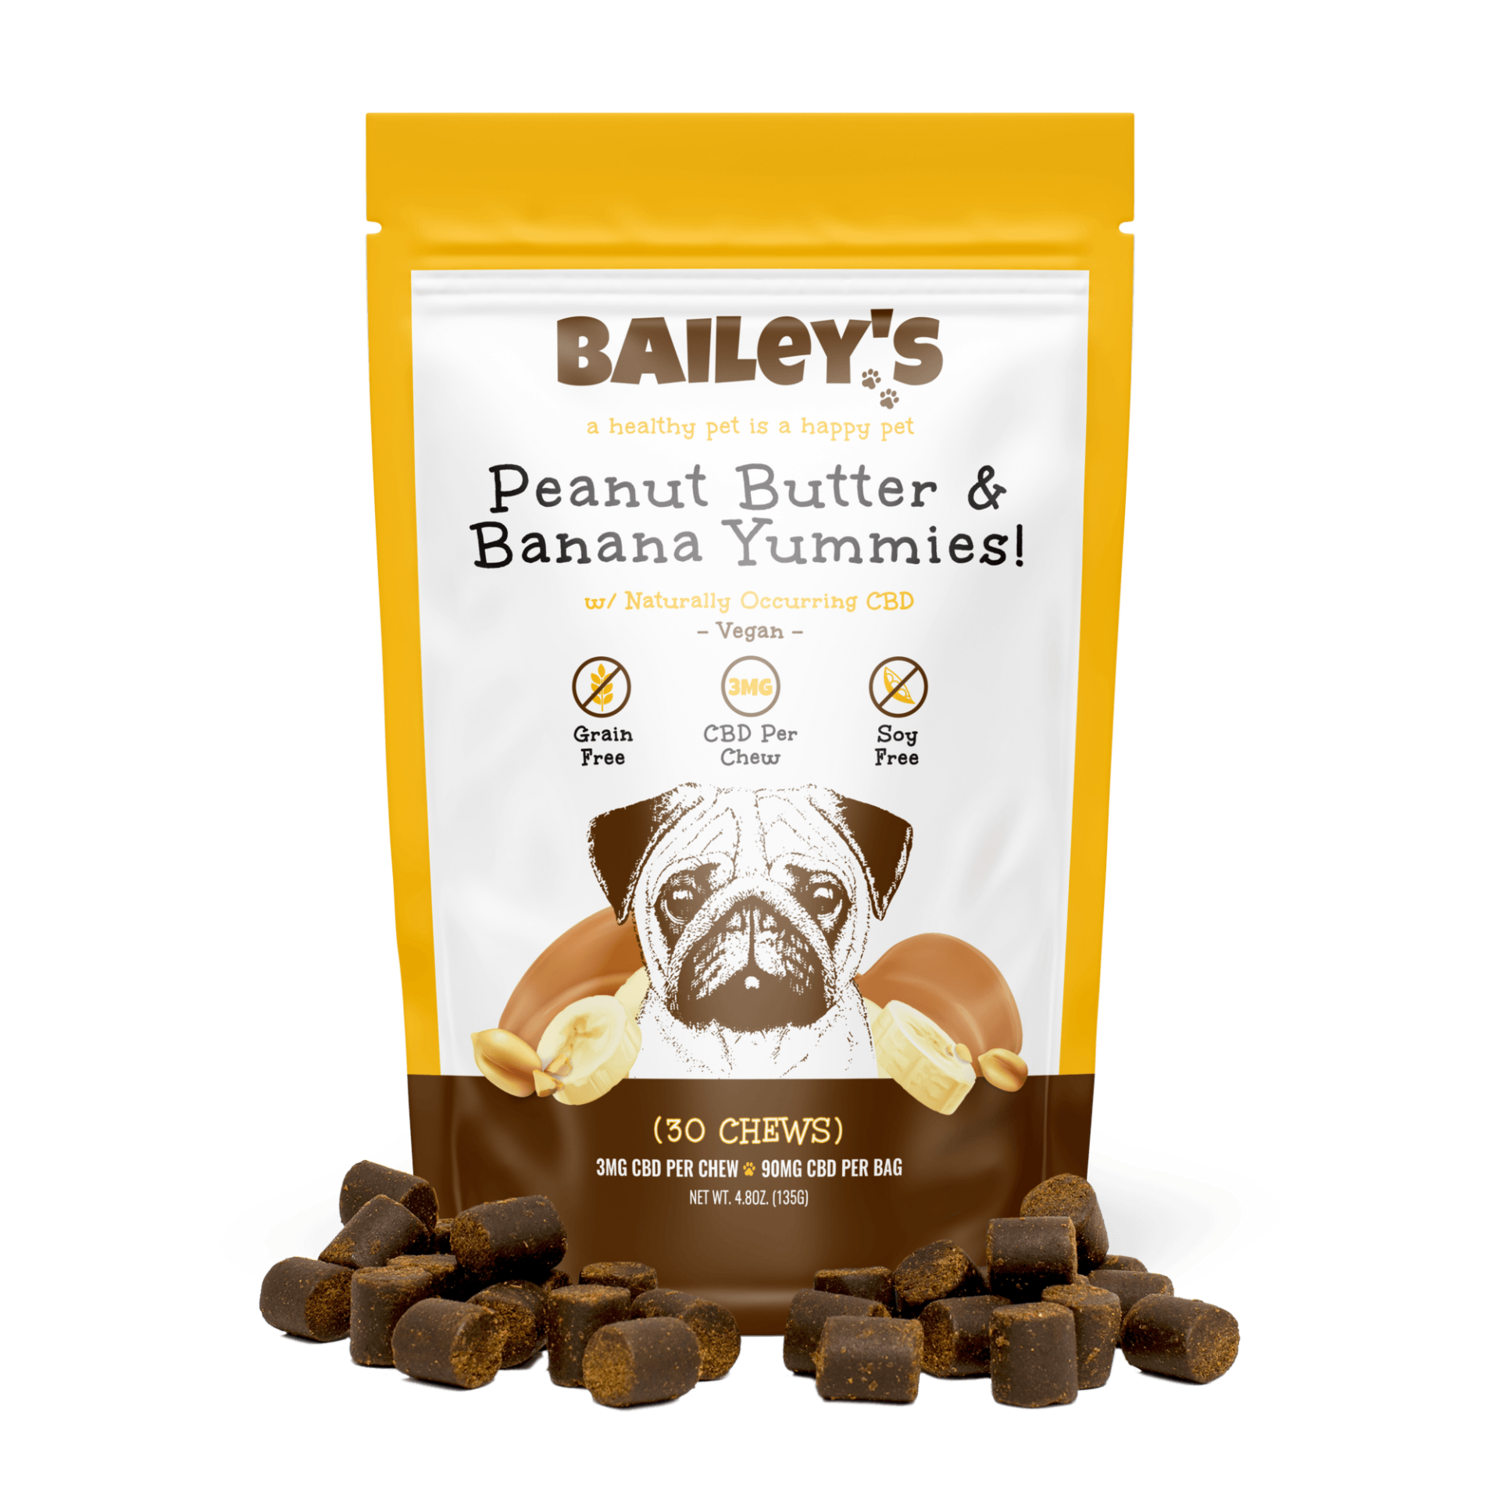 Bailey's Peanut Butter & Banana Yummies! 30 Count Bag w/ 3MG CBD Per Chew